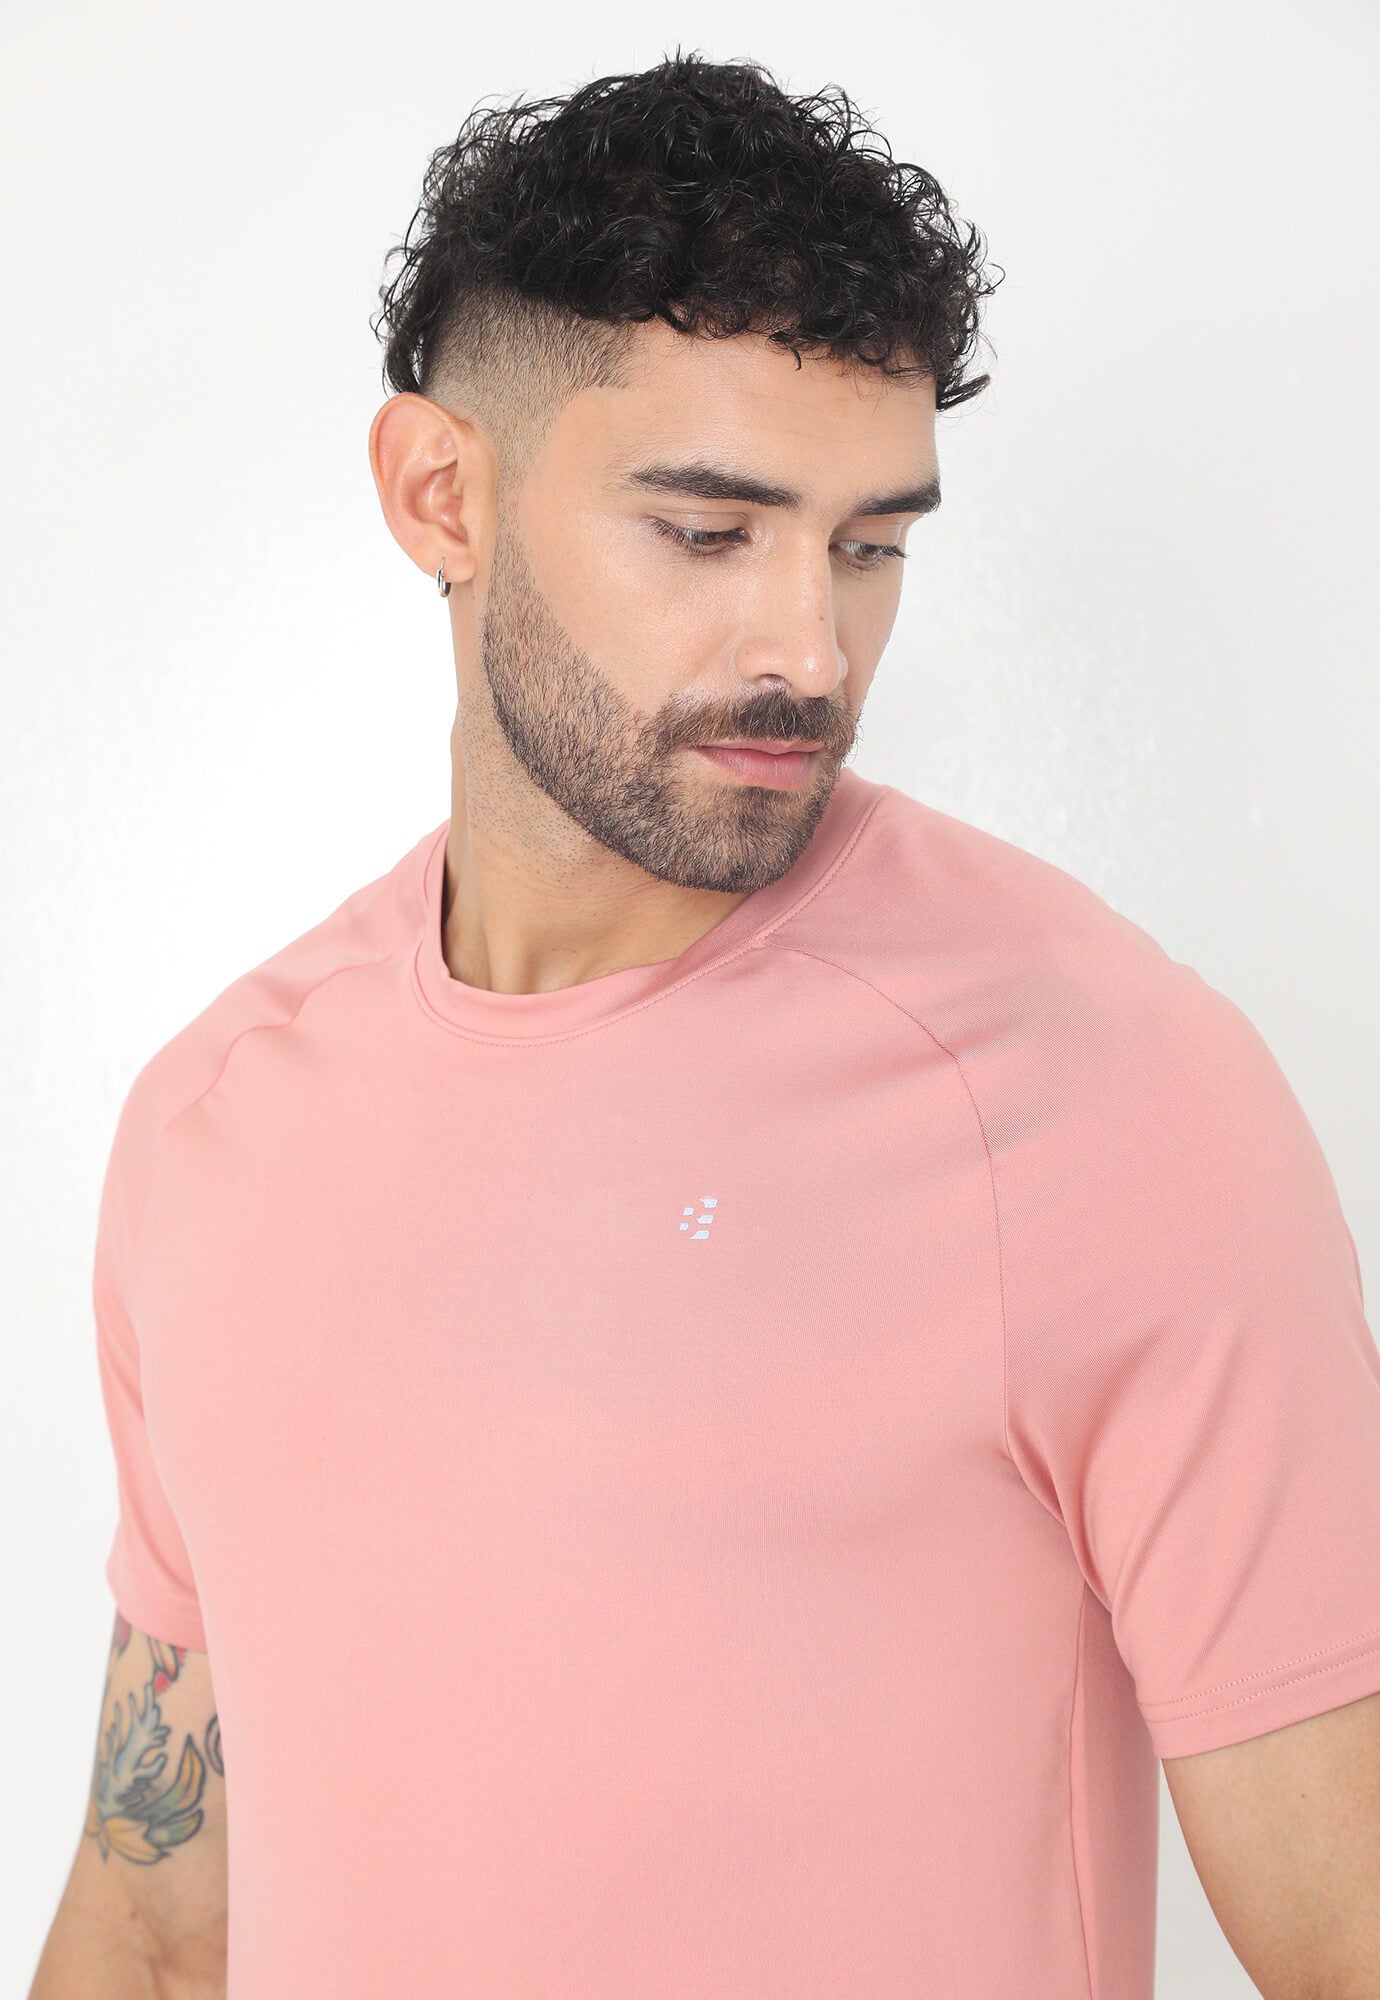 Camiseta deportiva rosa manga corta silueta semi-ajustada con cuello redondo para hombre